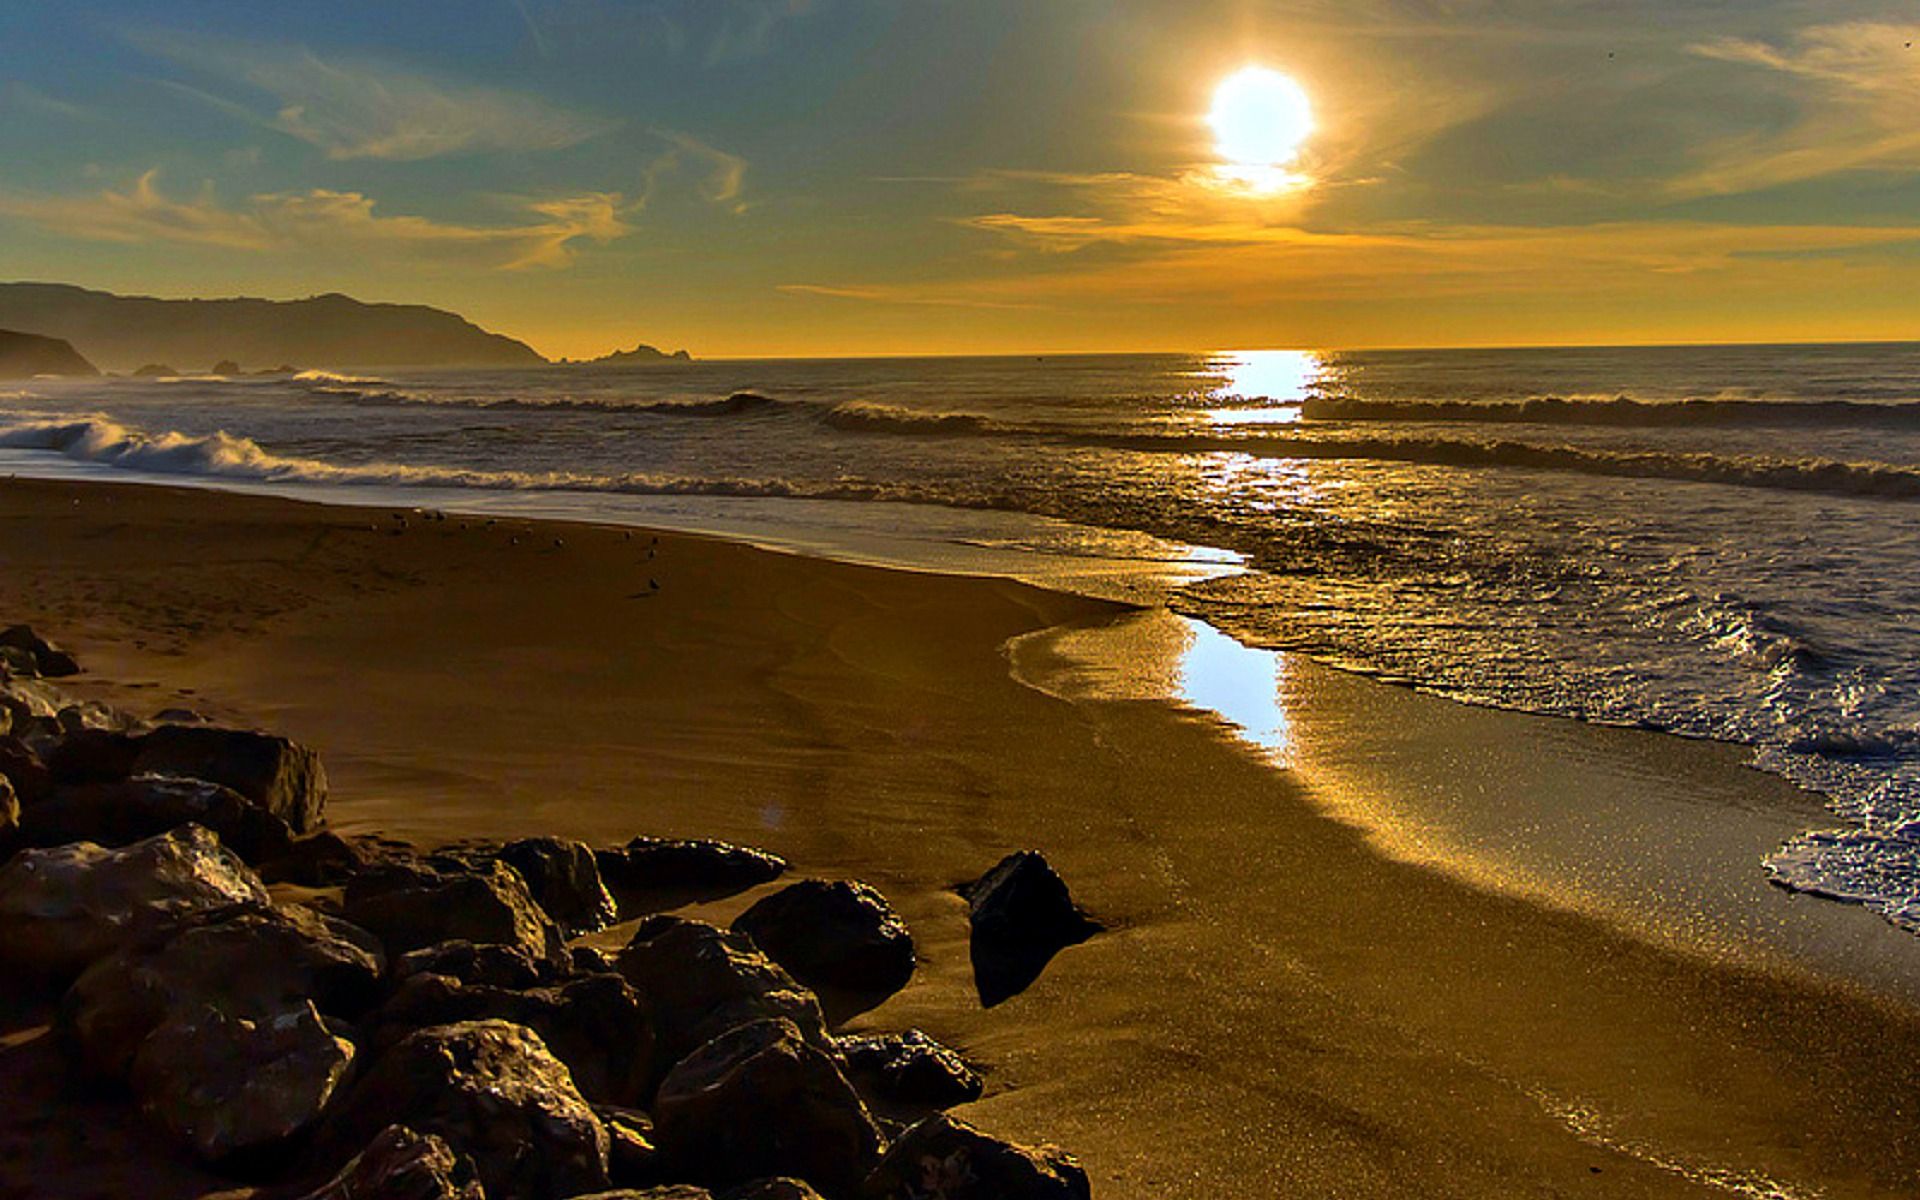 Gold sunset. Золотой закат на море. Золотистый закат море. Пейзаж в золотистых тонах. Море золота.